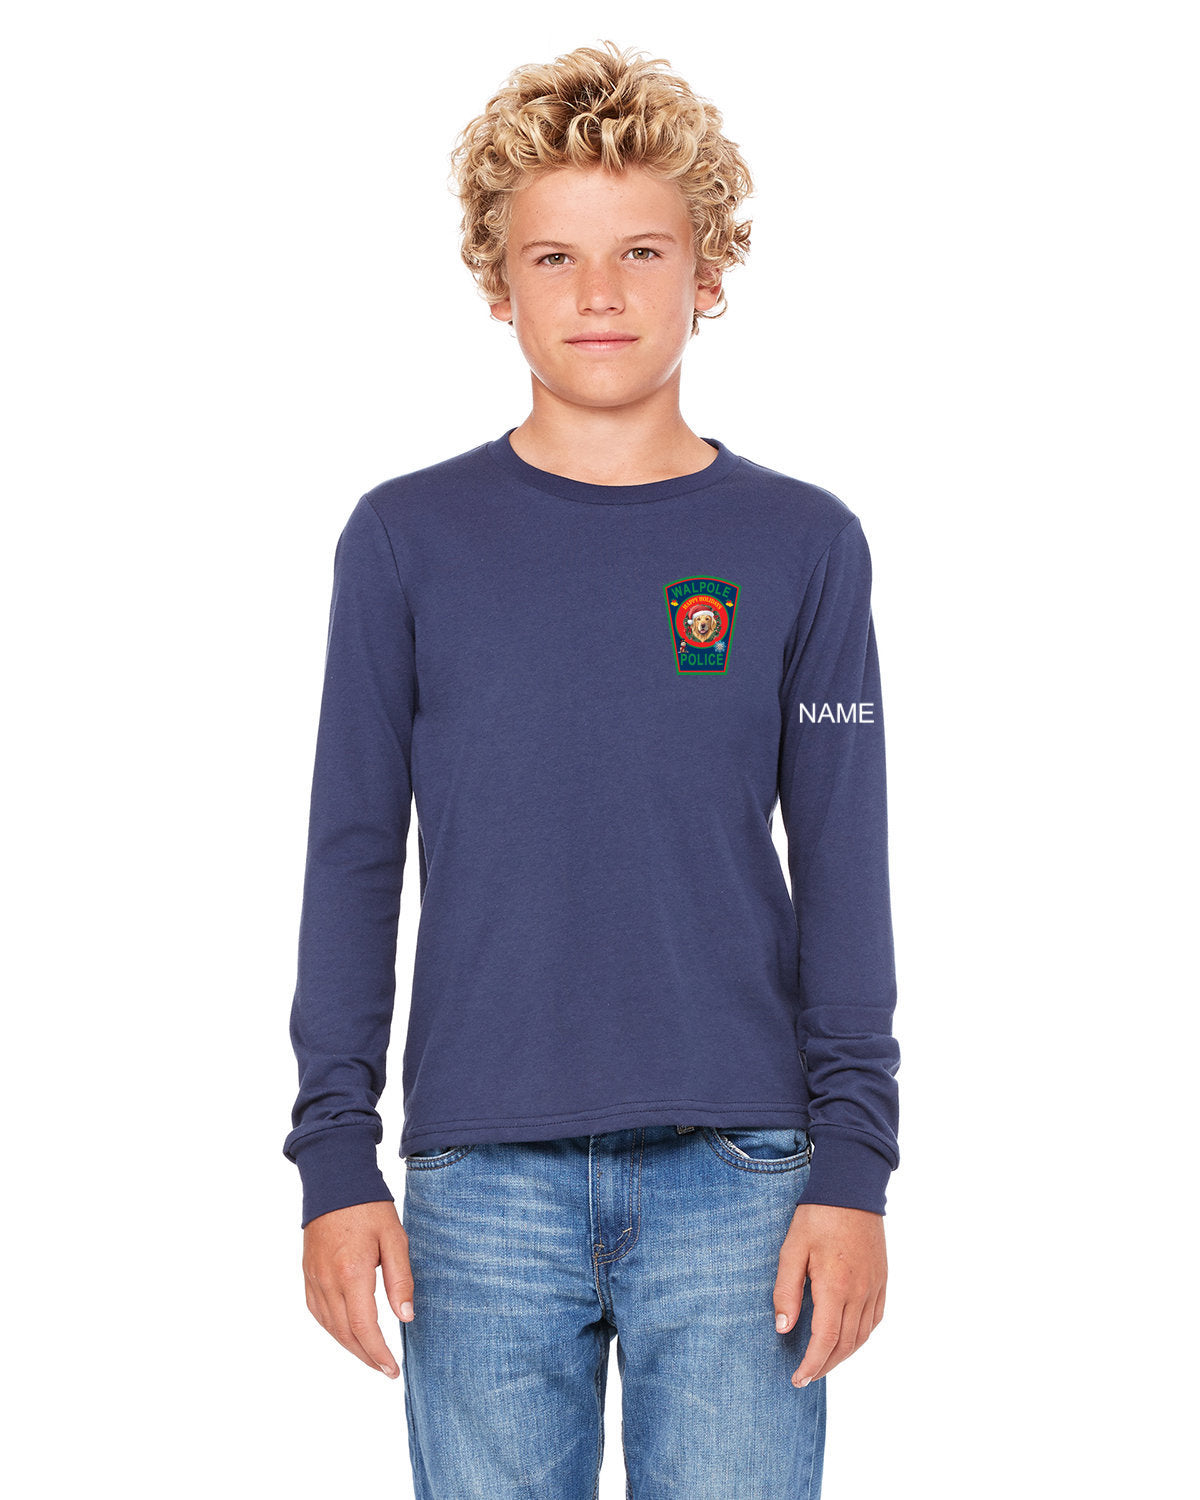 Walpole PD Xmas - Bella + Canvas Youth Jersey Long-Sleeve T-Shirt - 3501Y